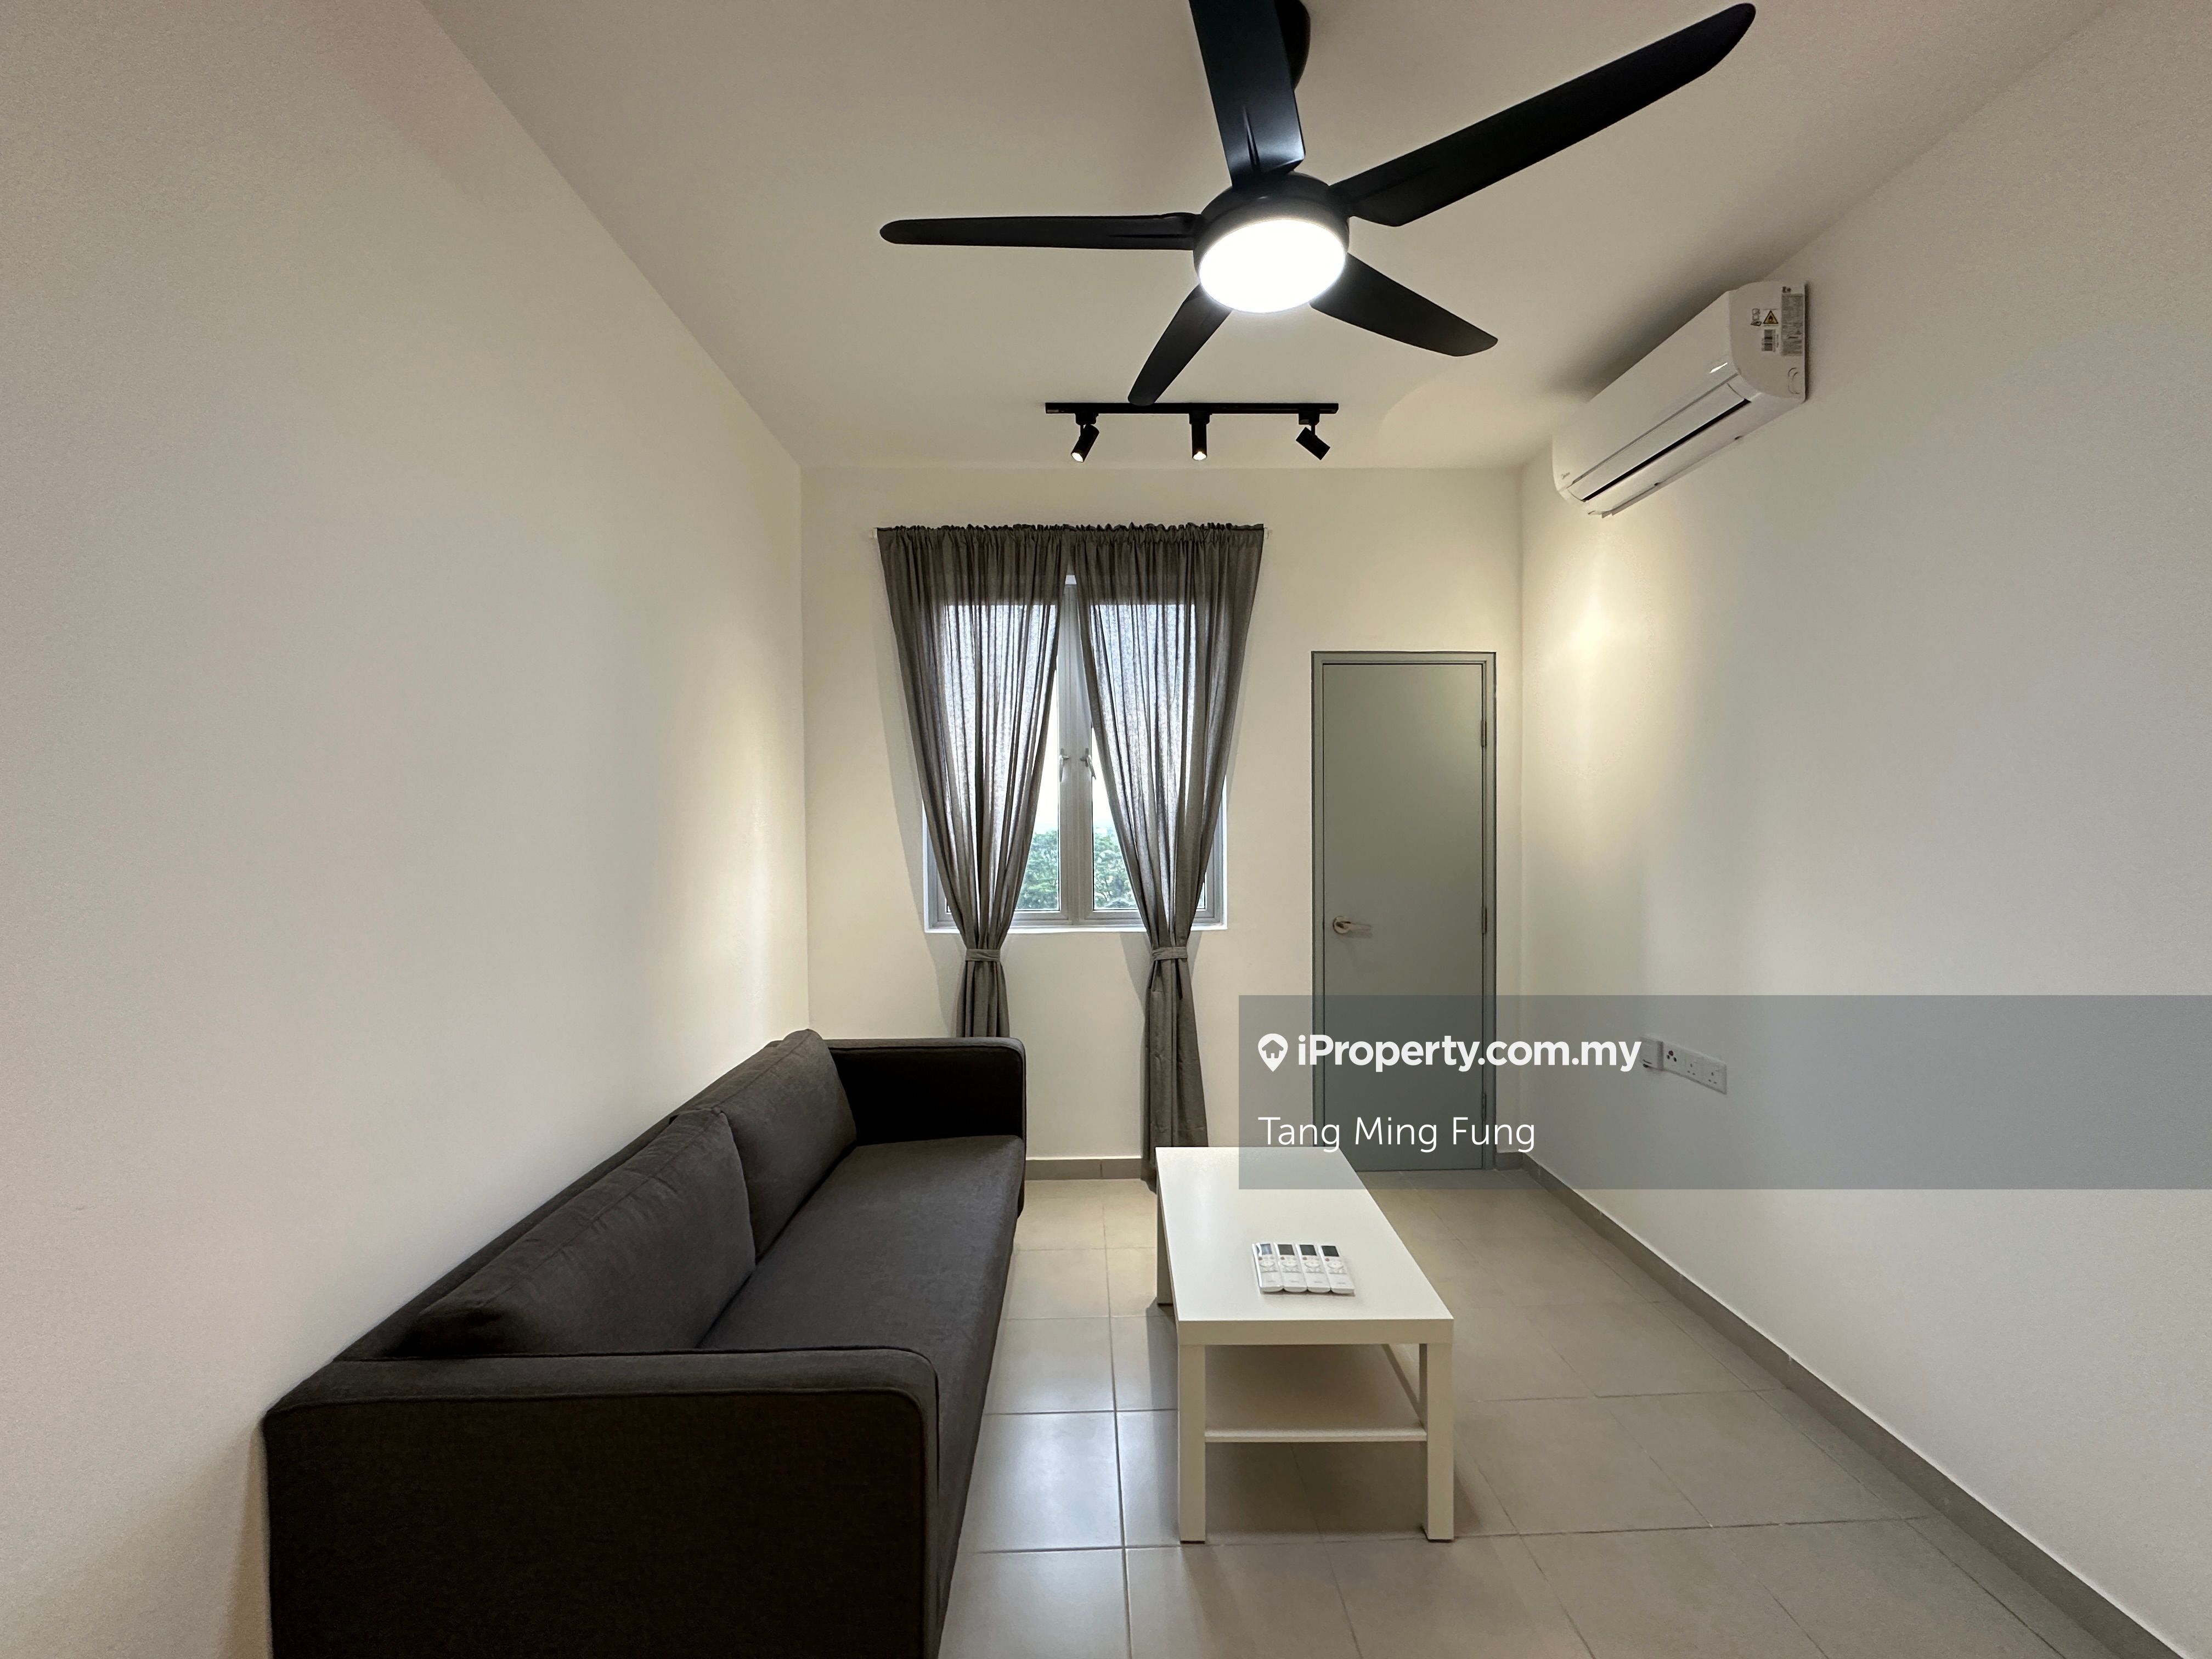 Tangerine Suites Apartment 3 bedrooms for rent in Dengkil, Selangor ...